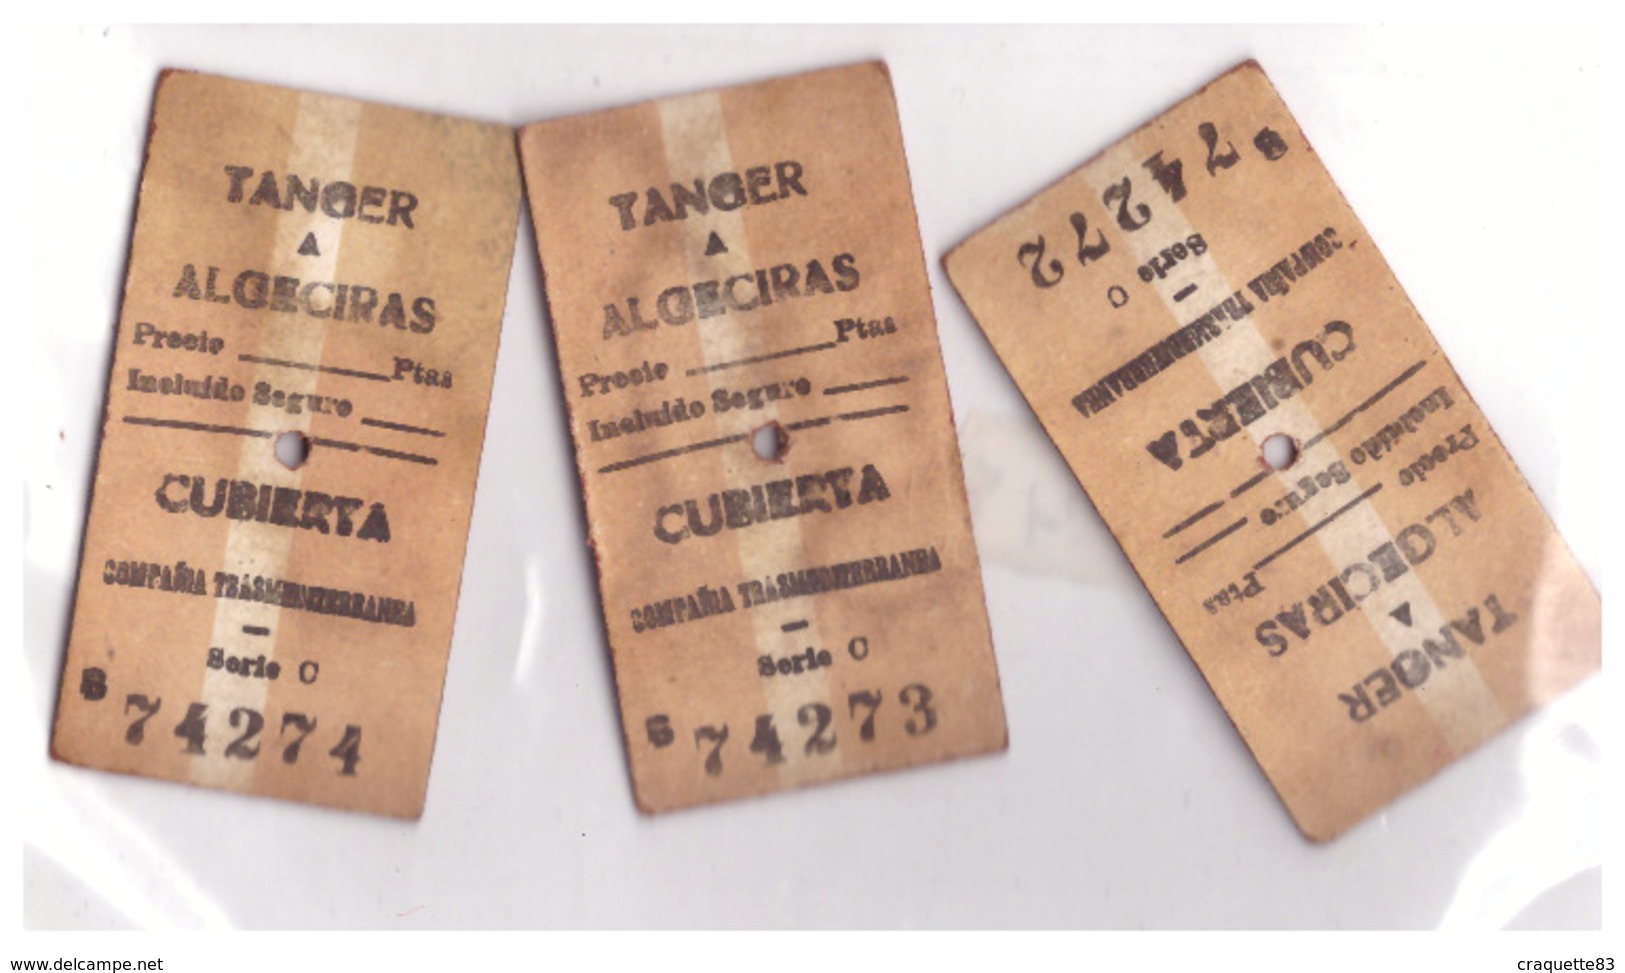 TANGER A ALGECIRAS - CUBIERTA  3 TICKETS :SERIE C N°74274 74273 74272-compania Transmediterranée - World